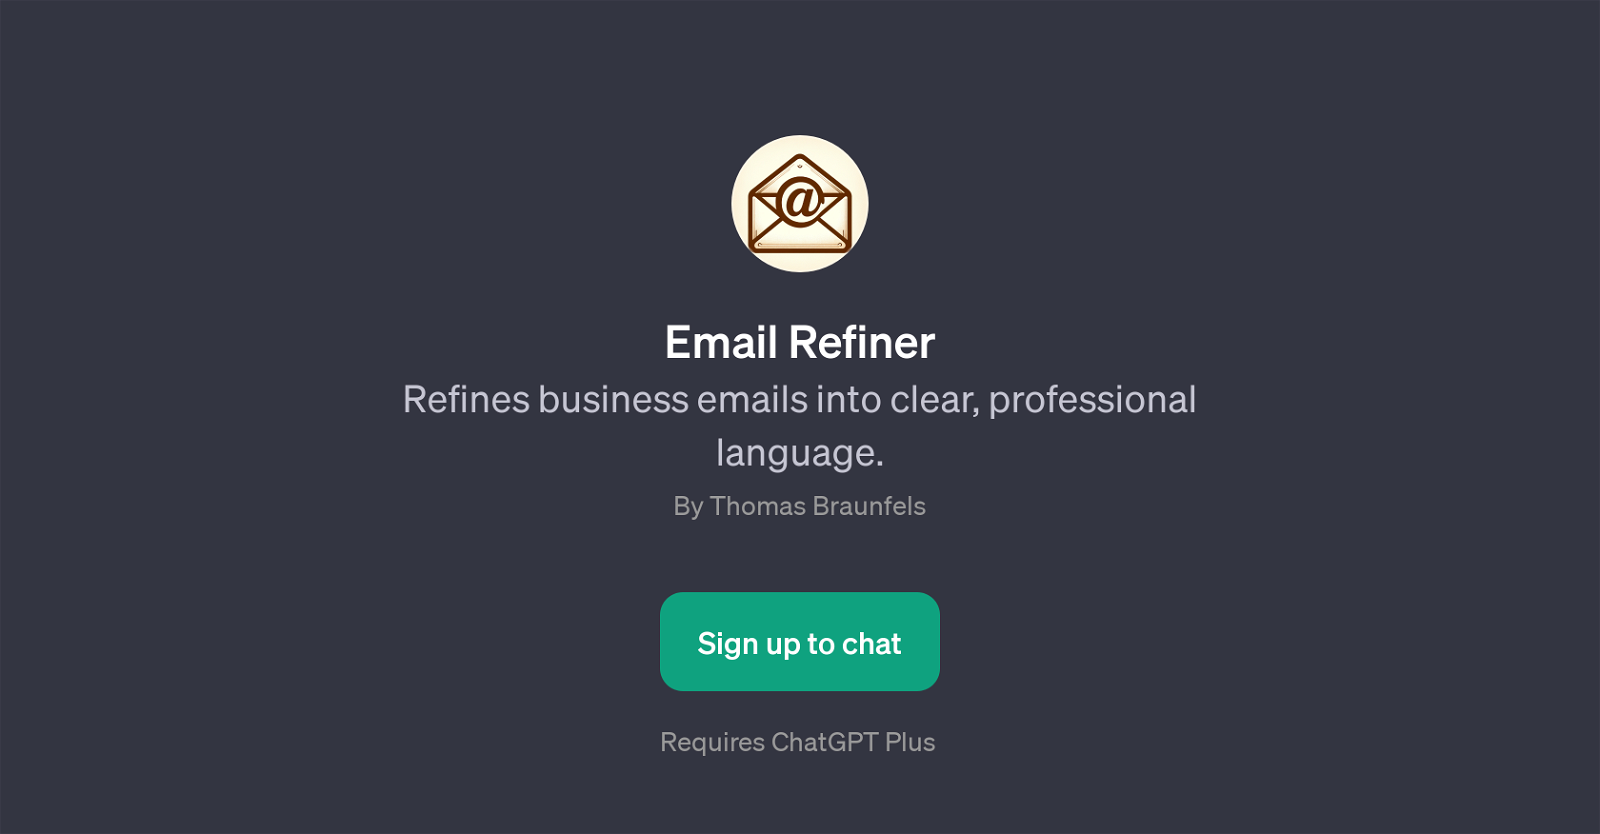 Email Refiner website